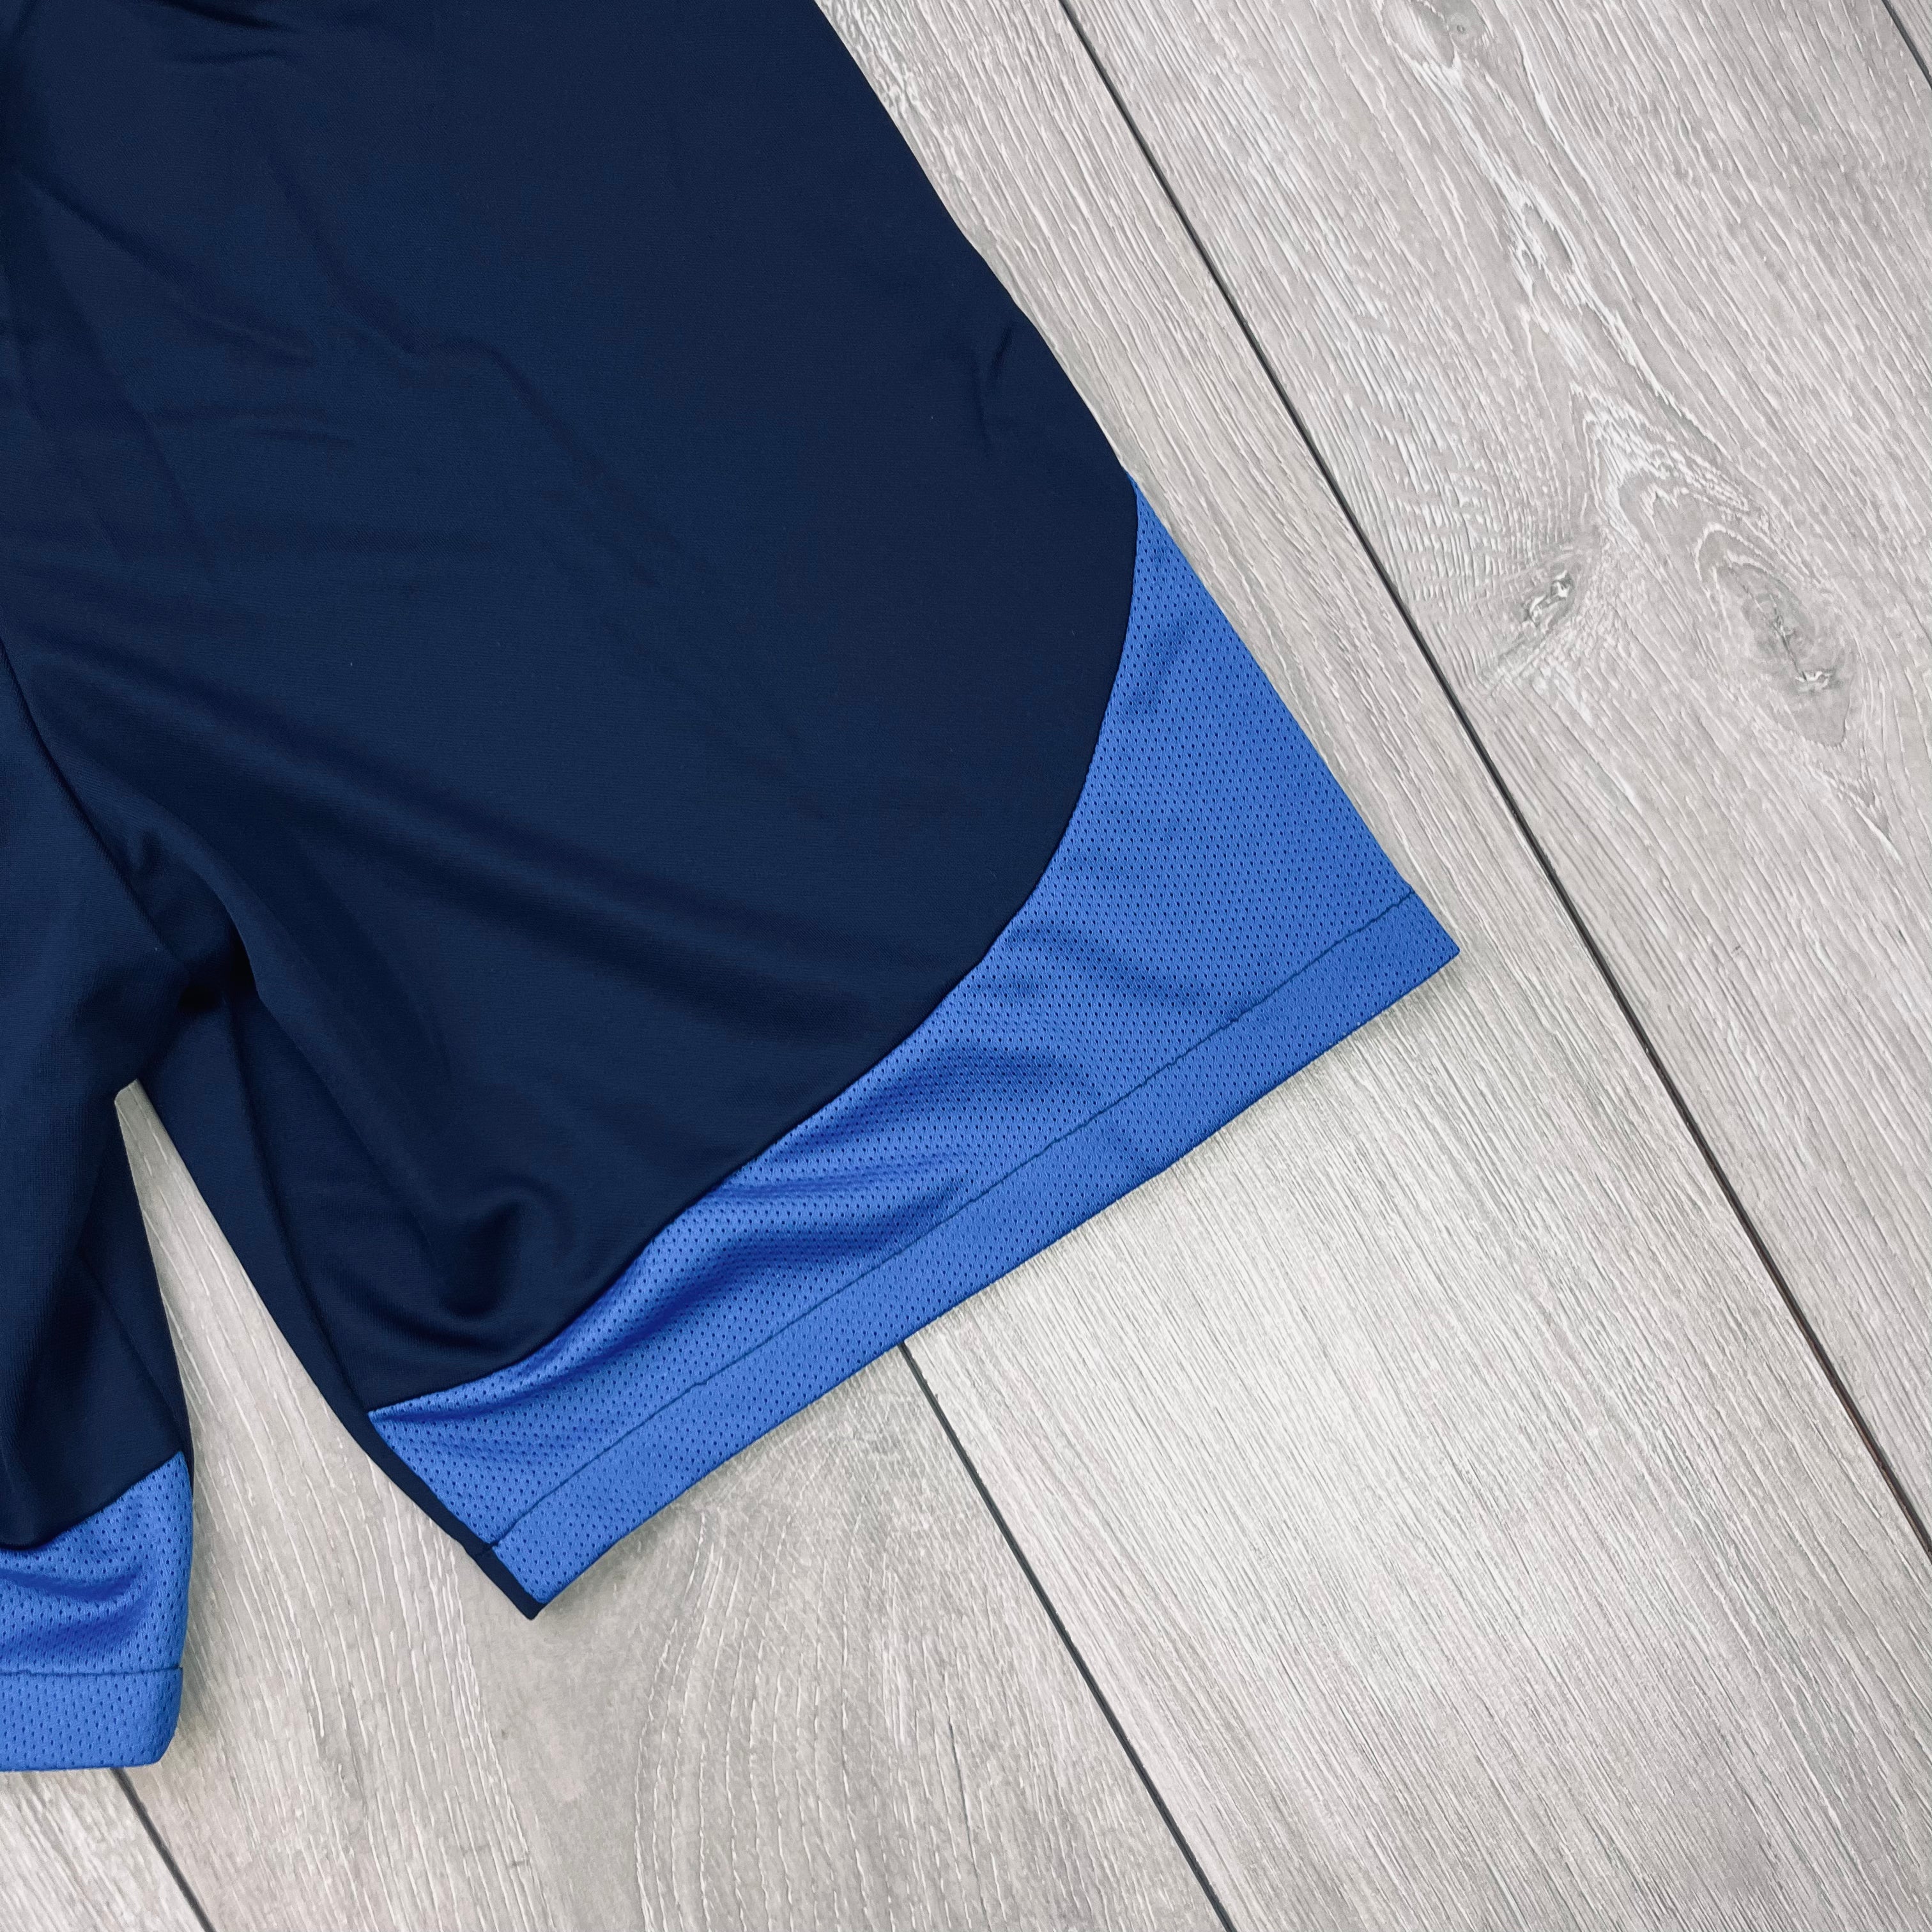 Nike Dri-Fit Shorts - Navy